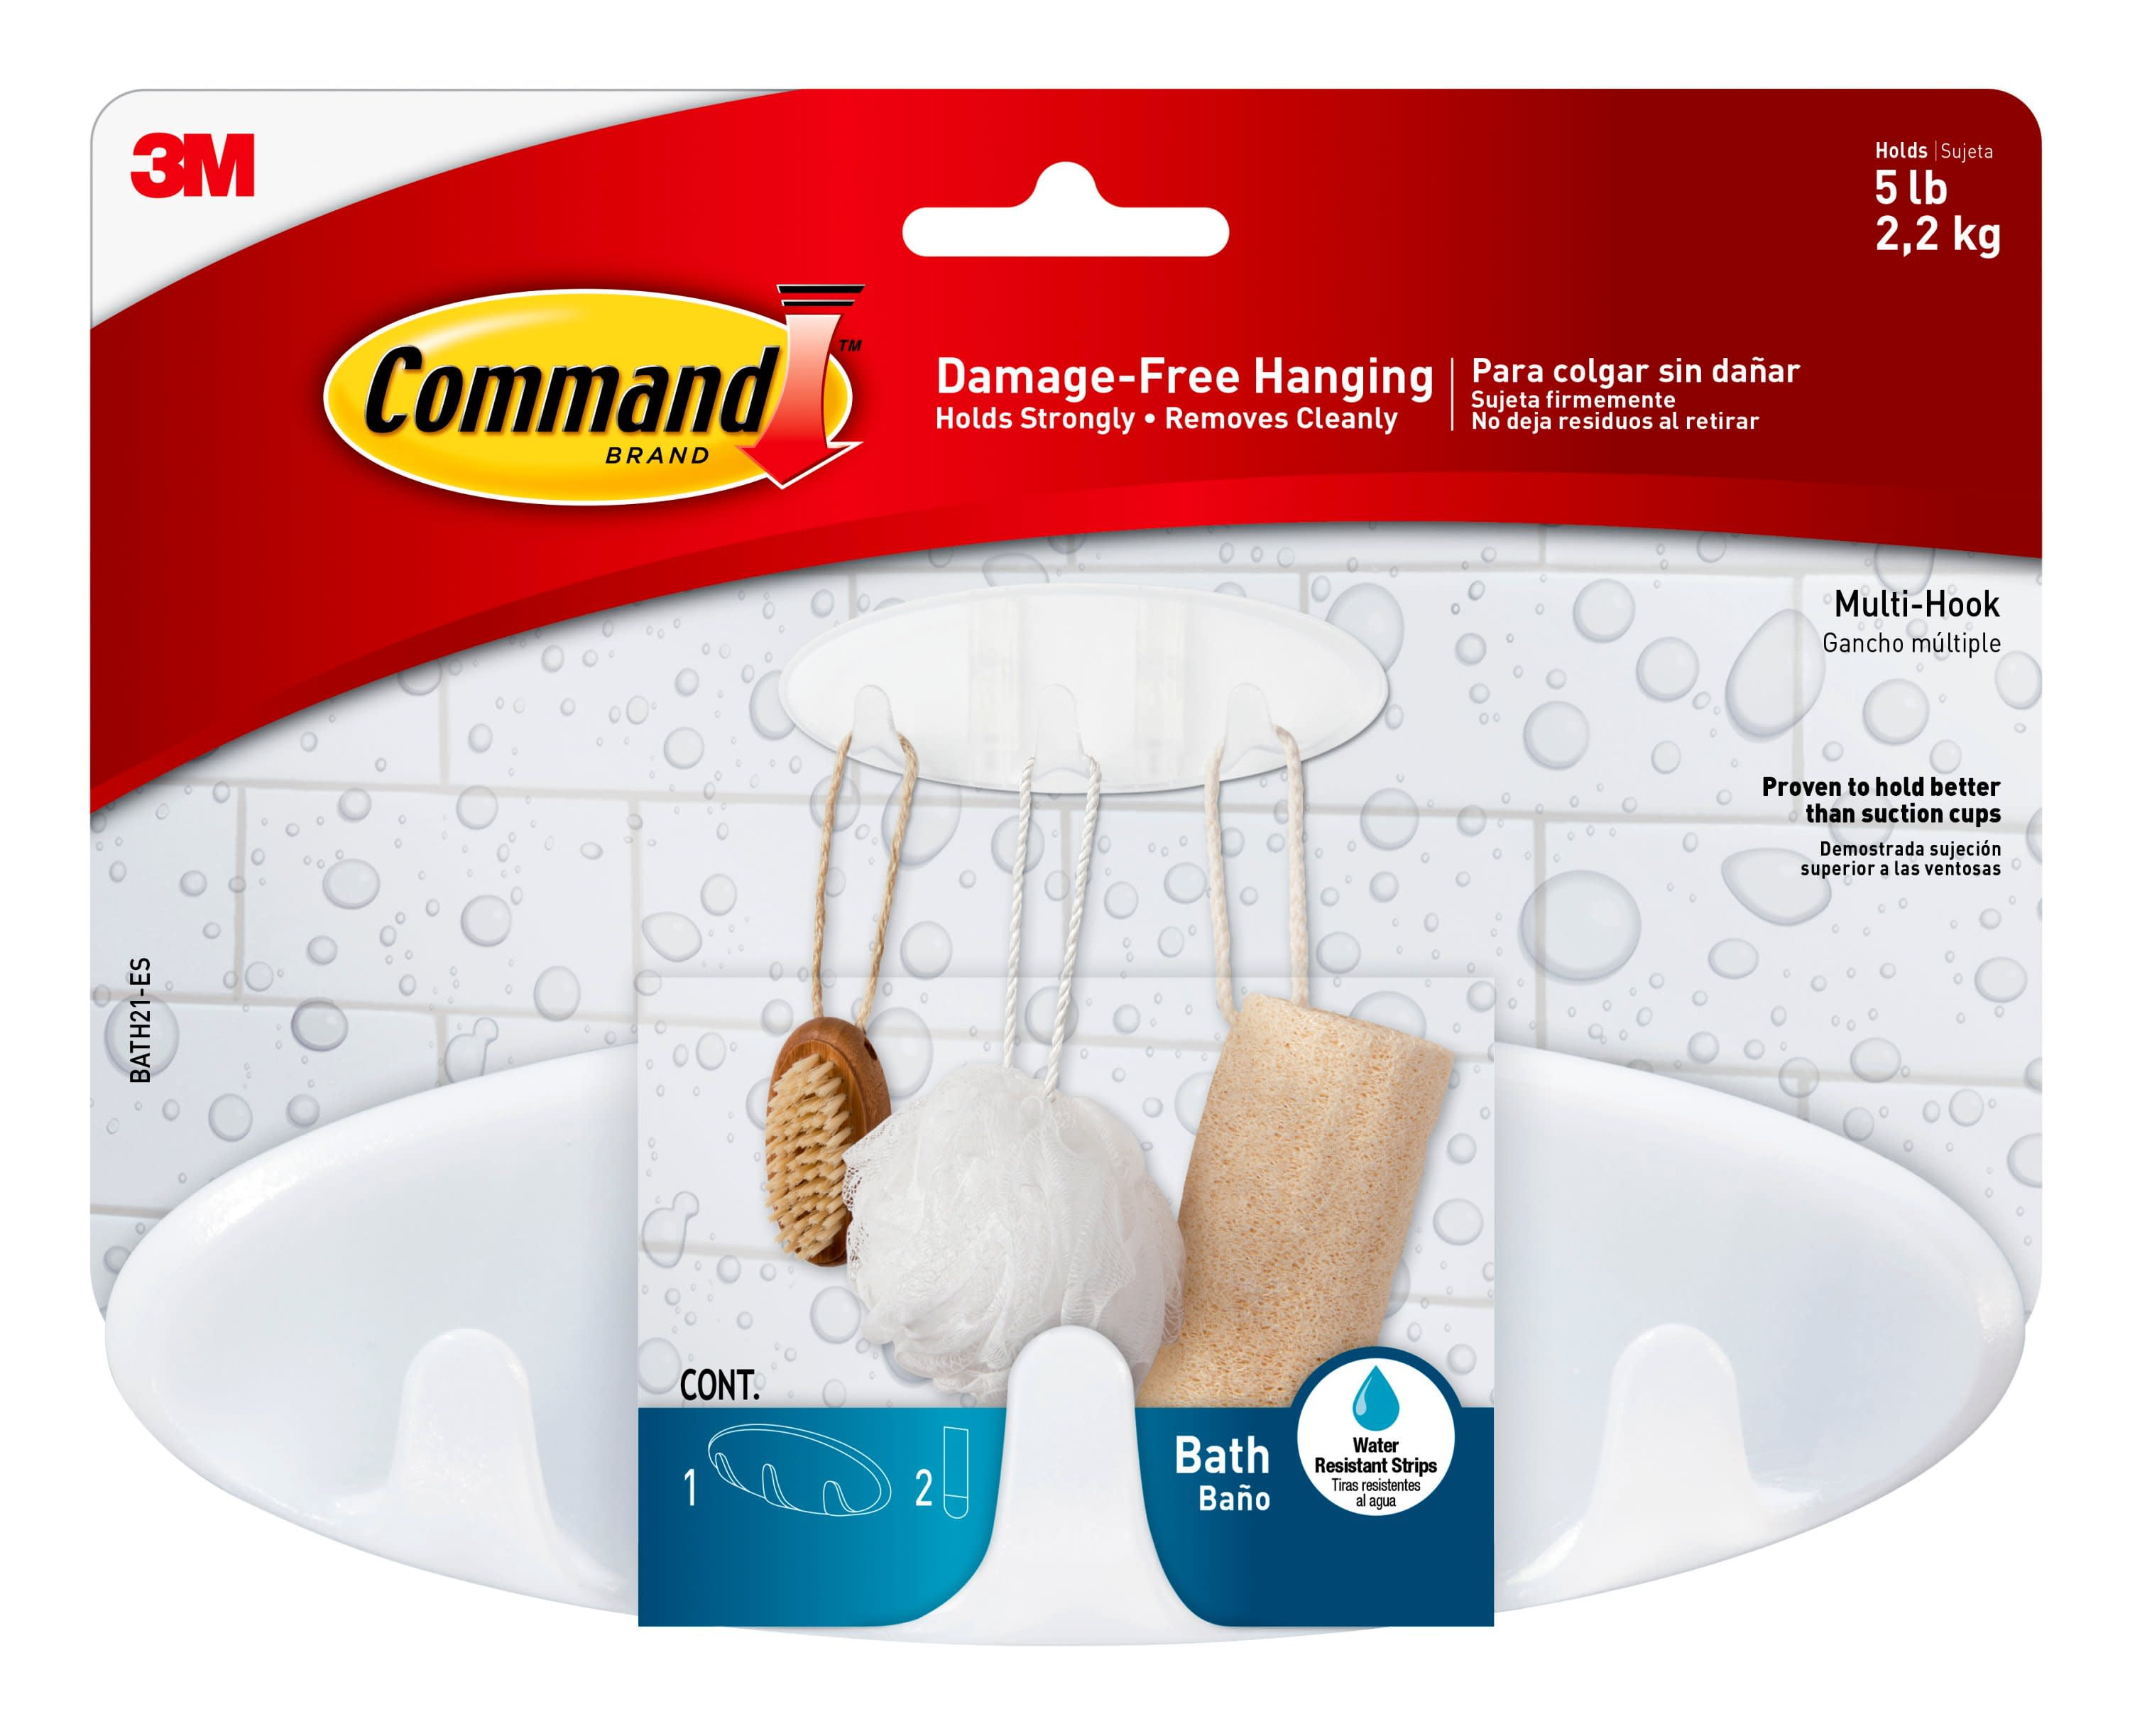 Command Bath Multi-Hook, 1 Wall Multi-hook, 2 Large Water Resistant Strips, Bathroom Organization